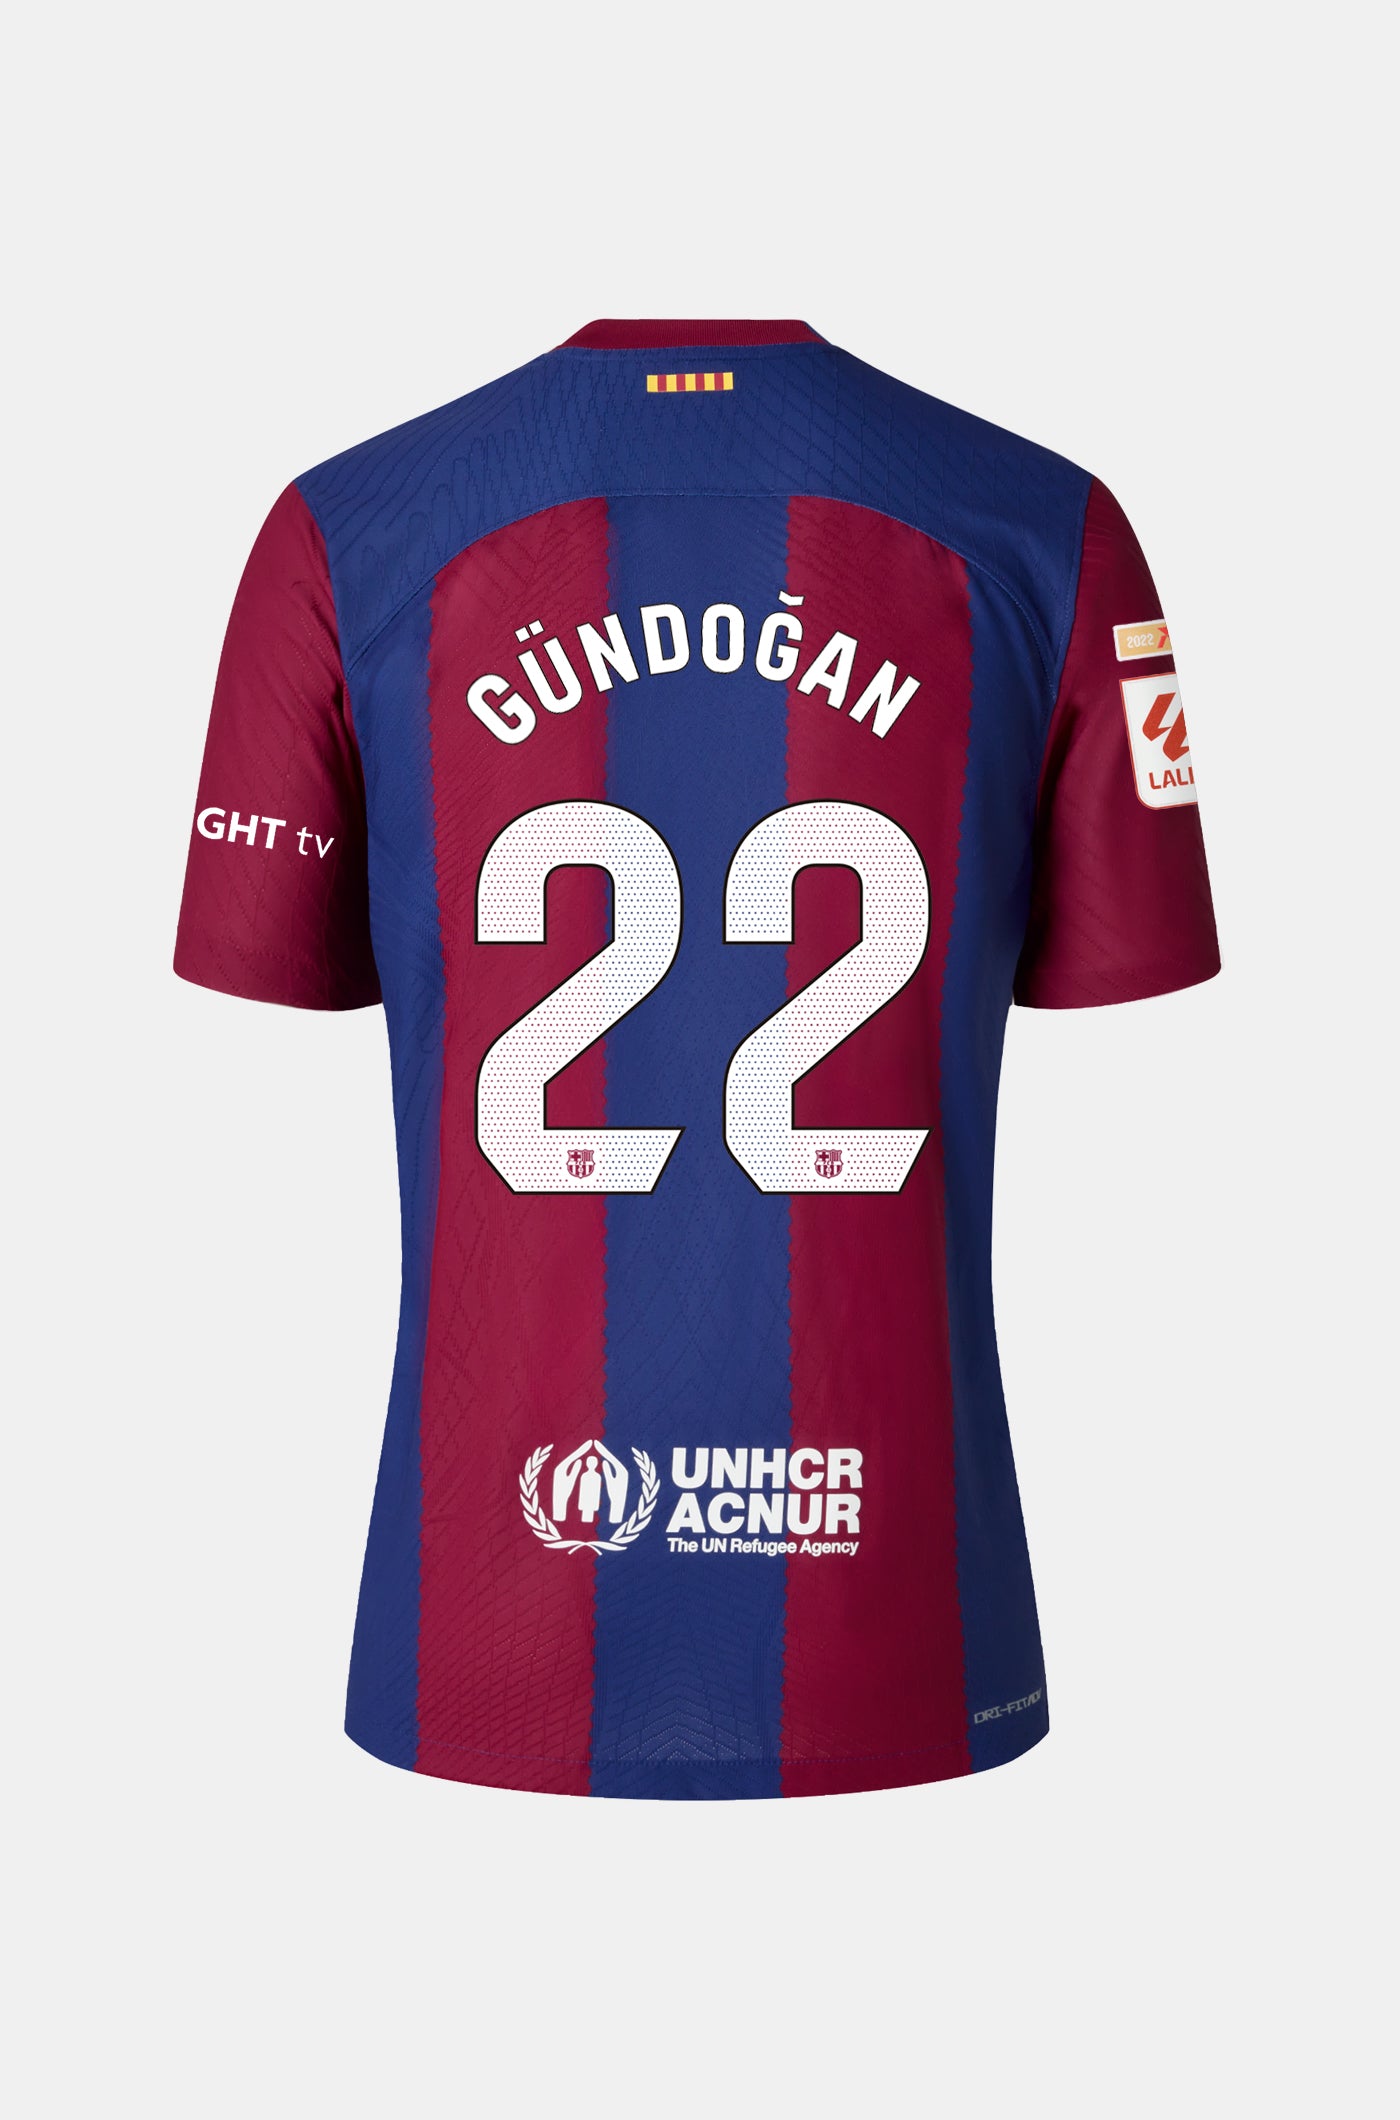 LFP FC Barcelona home shirt 23/24 â€“ Junior - GÜNDO?AN